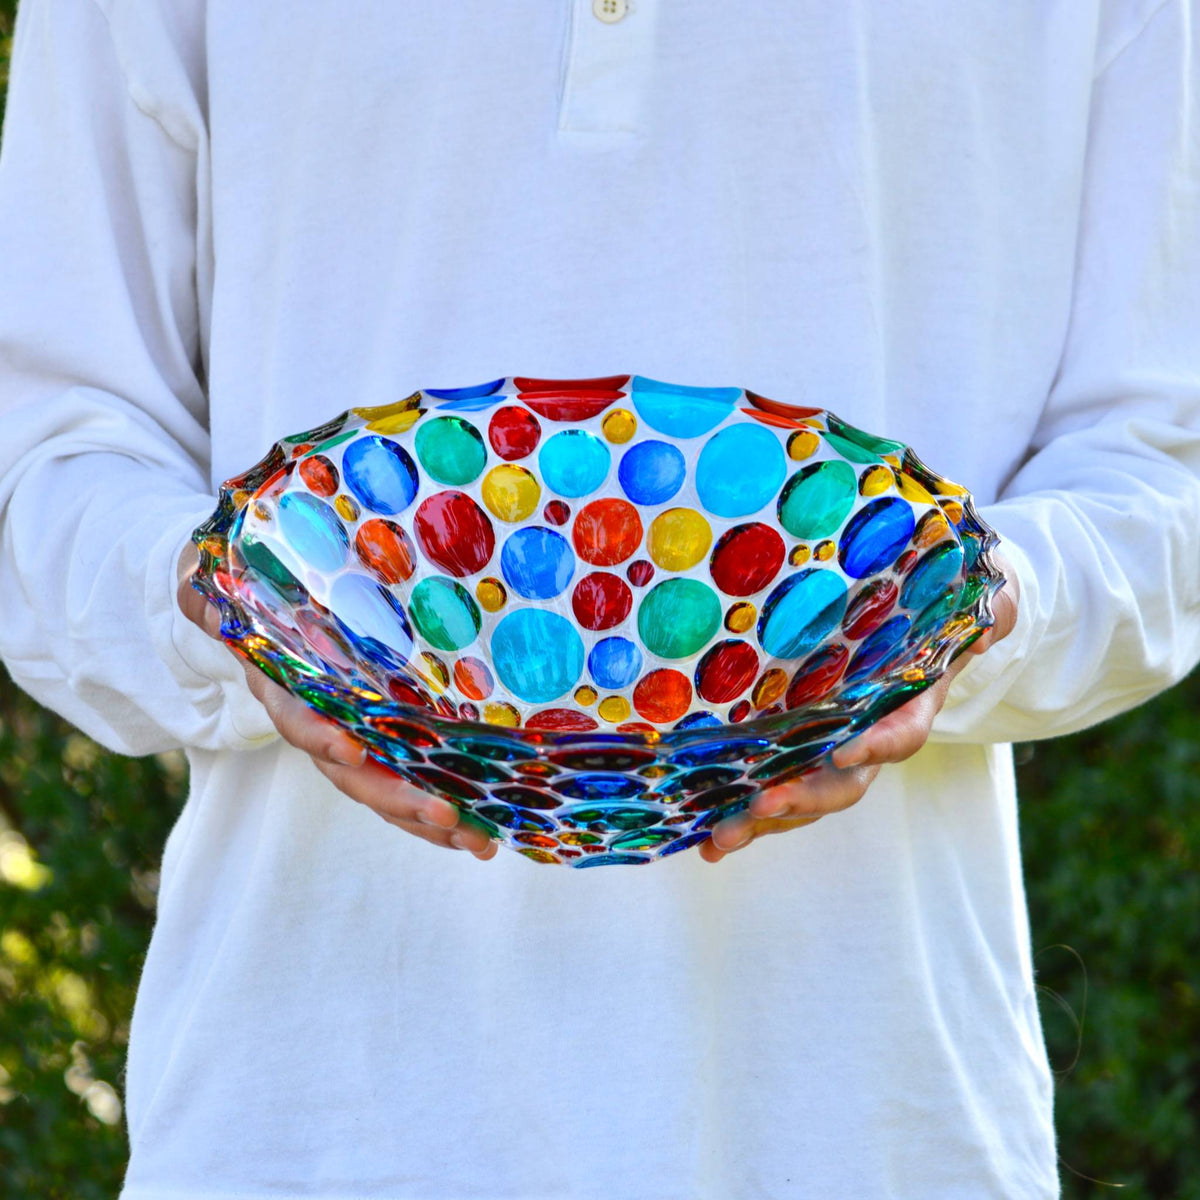 Lisboa Decorative Deep Round Glass Bowl, Hand-Painted, Made In Italy - My Italian Decor